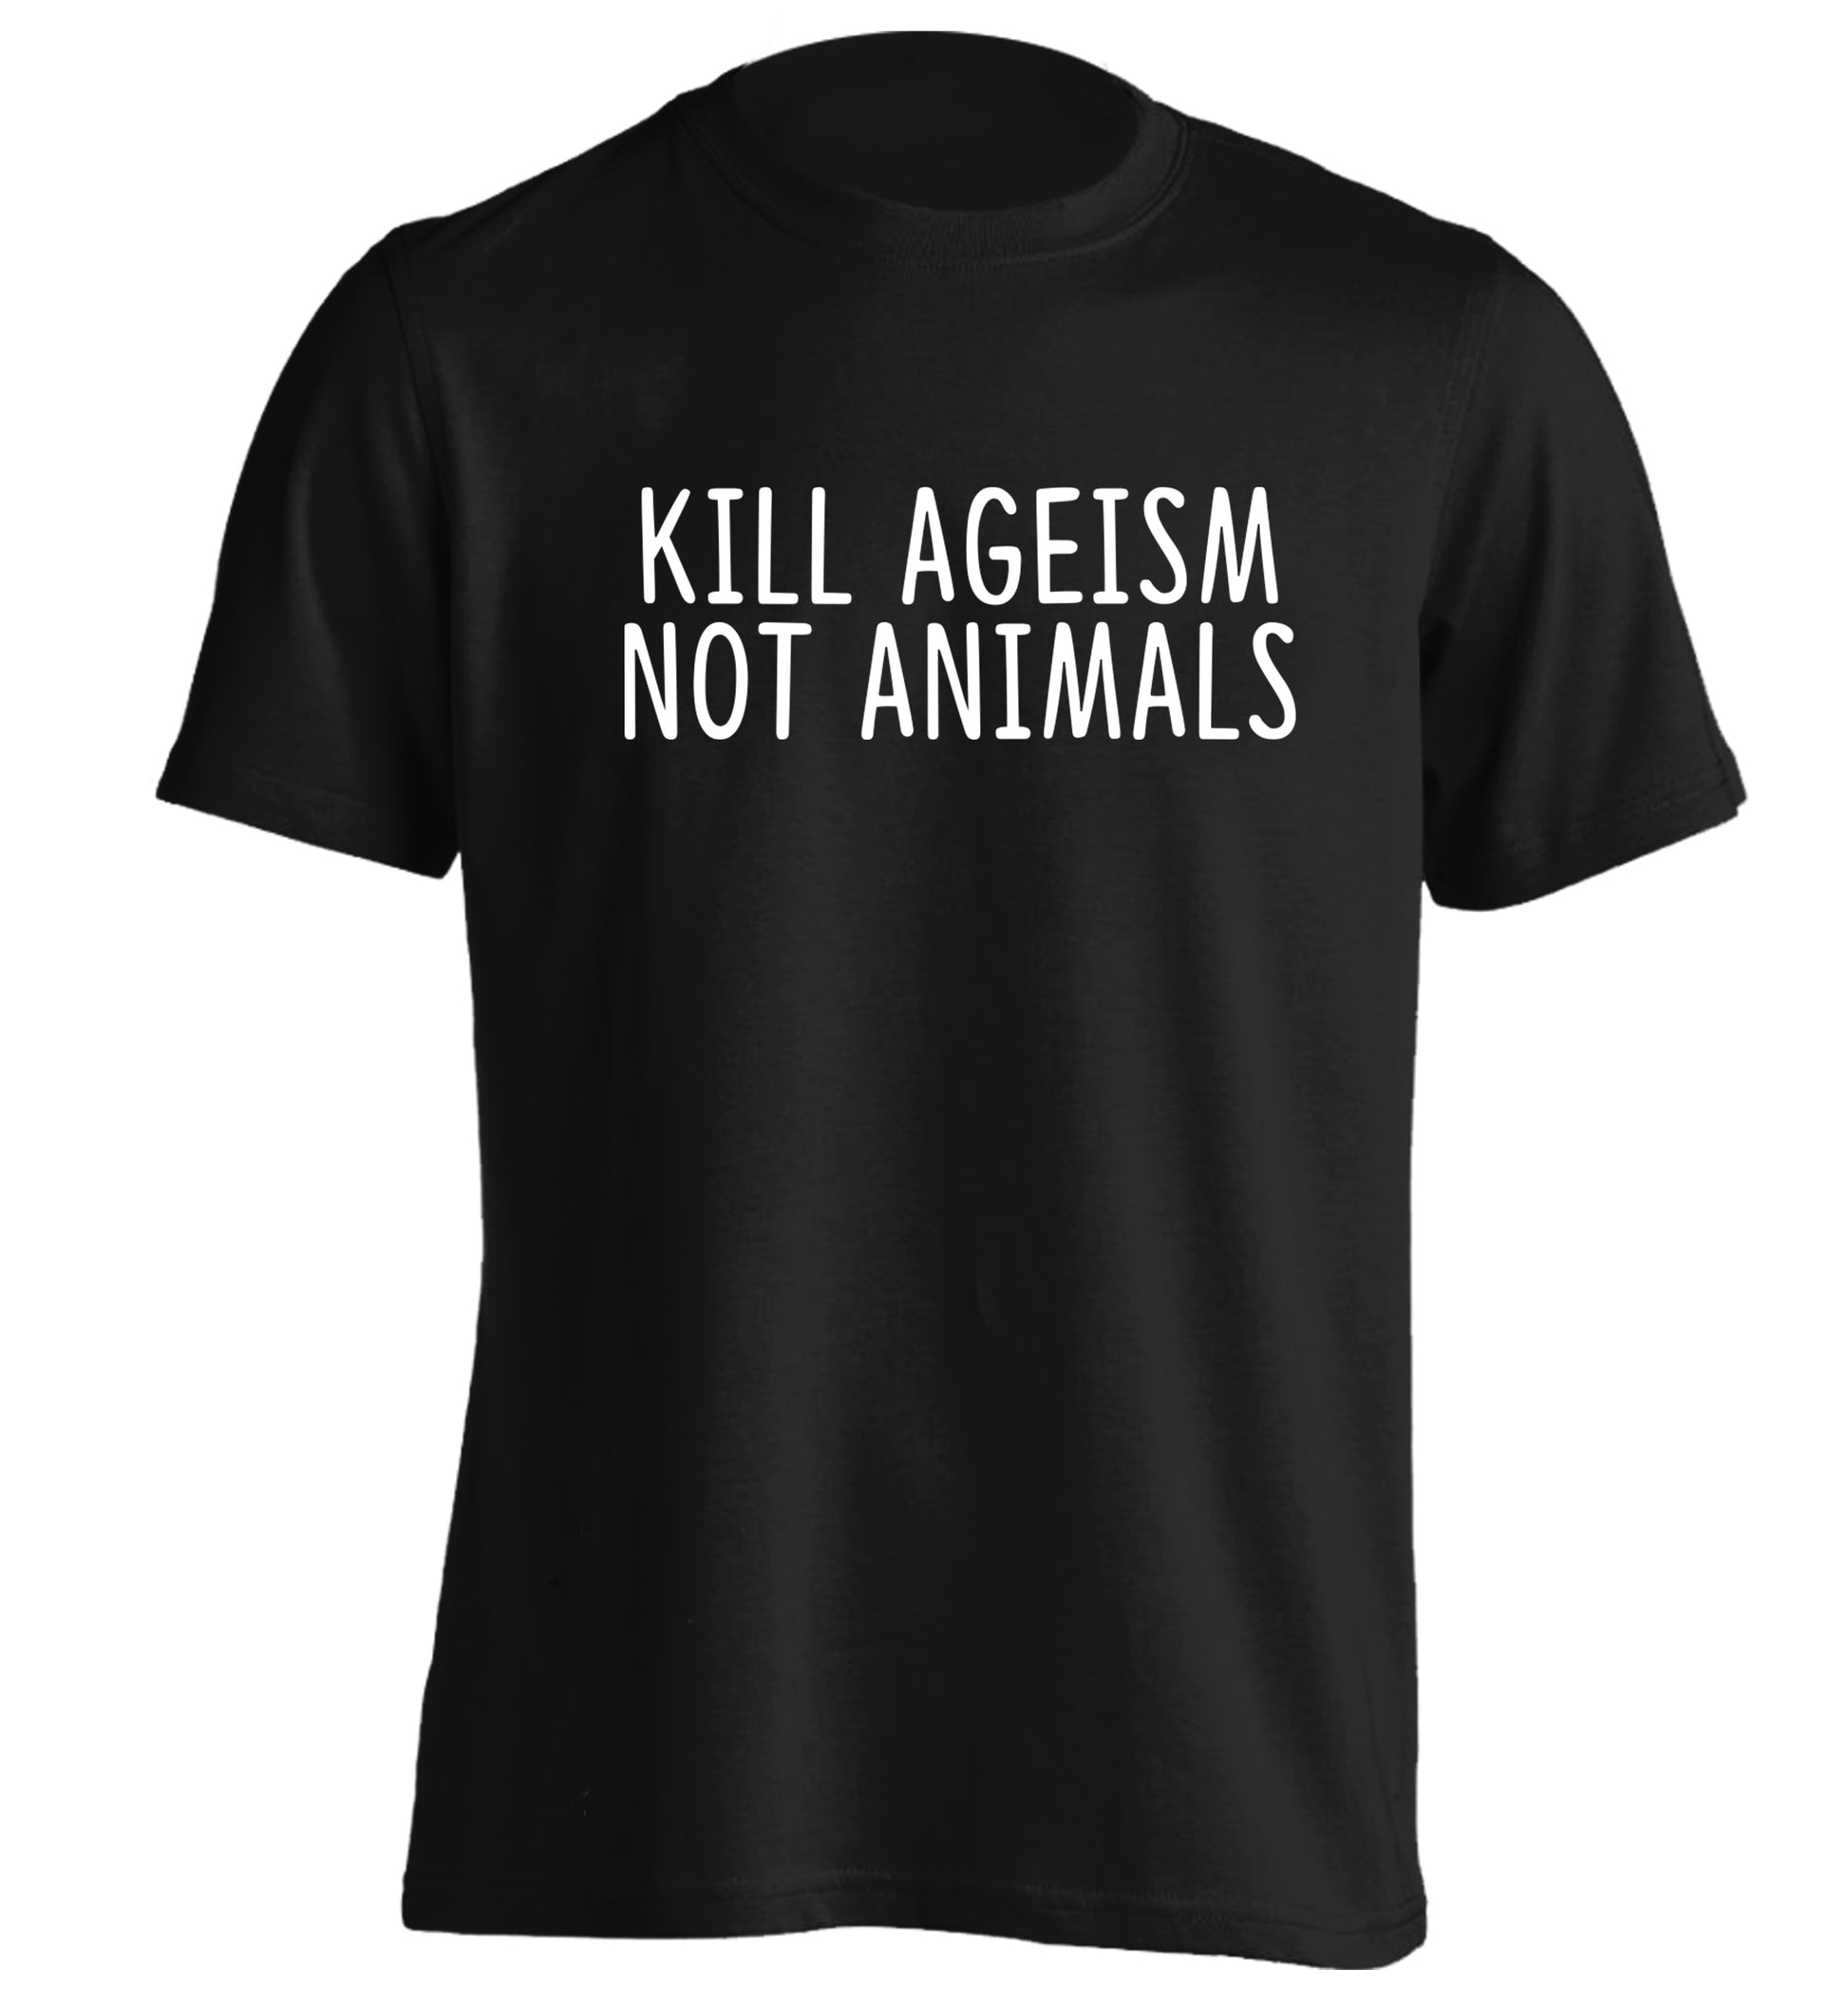 Kill Ageism Not Animals adults unisex black Tshirt 2XL